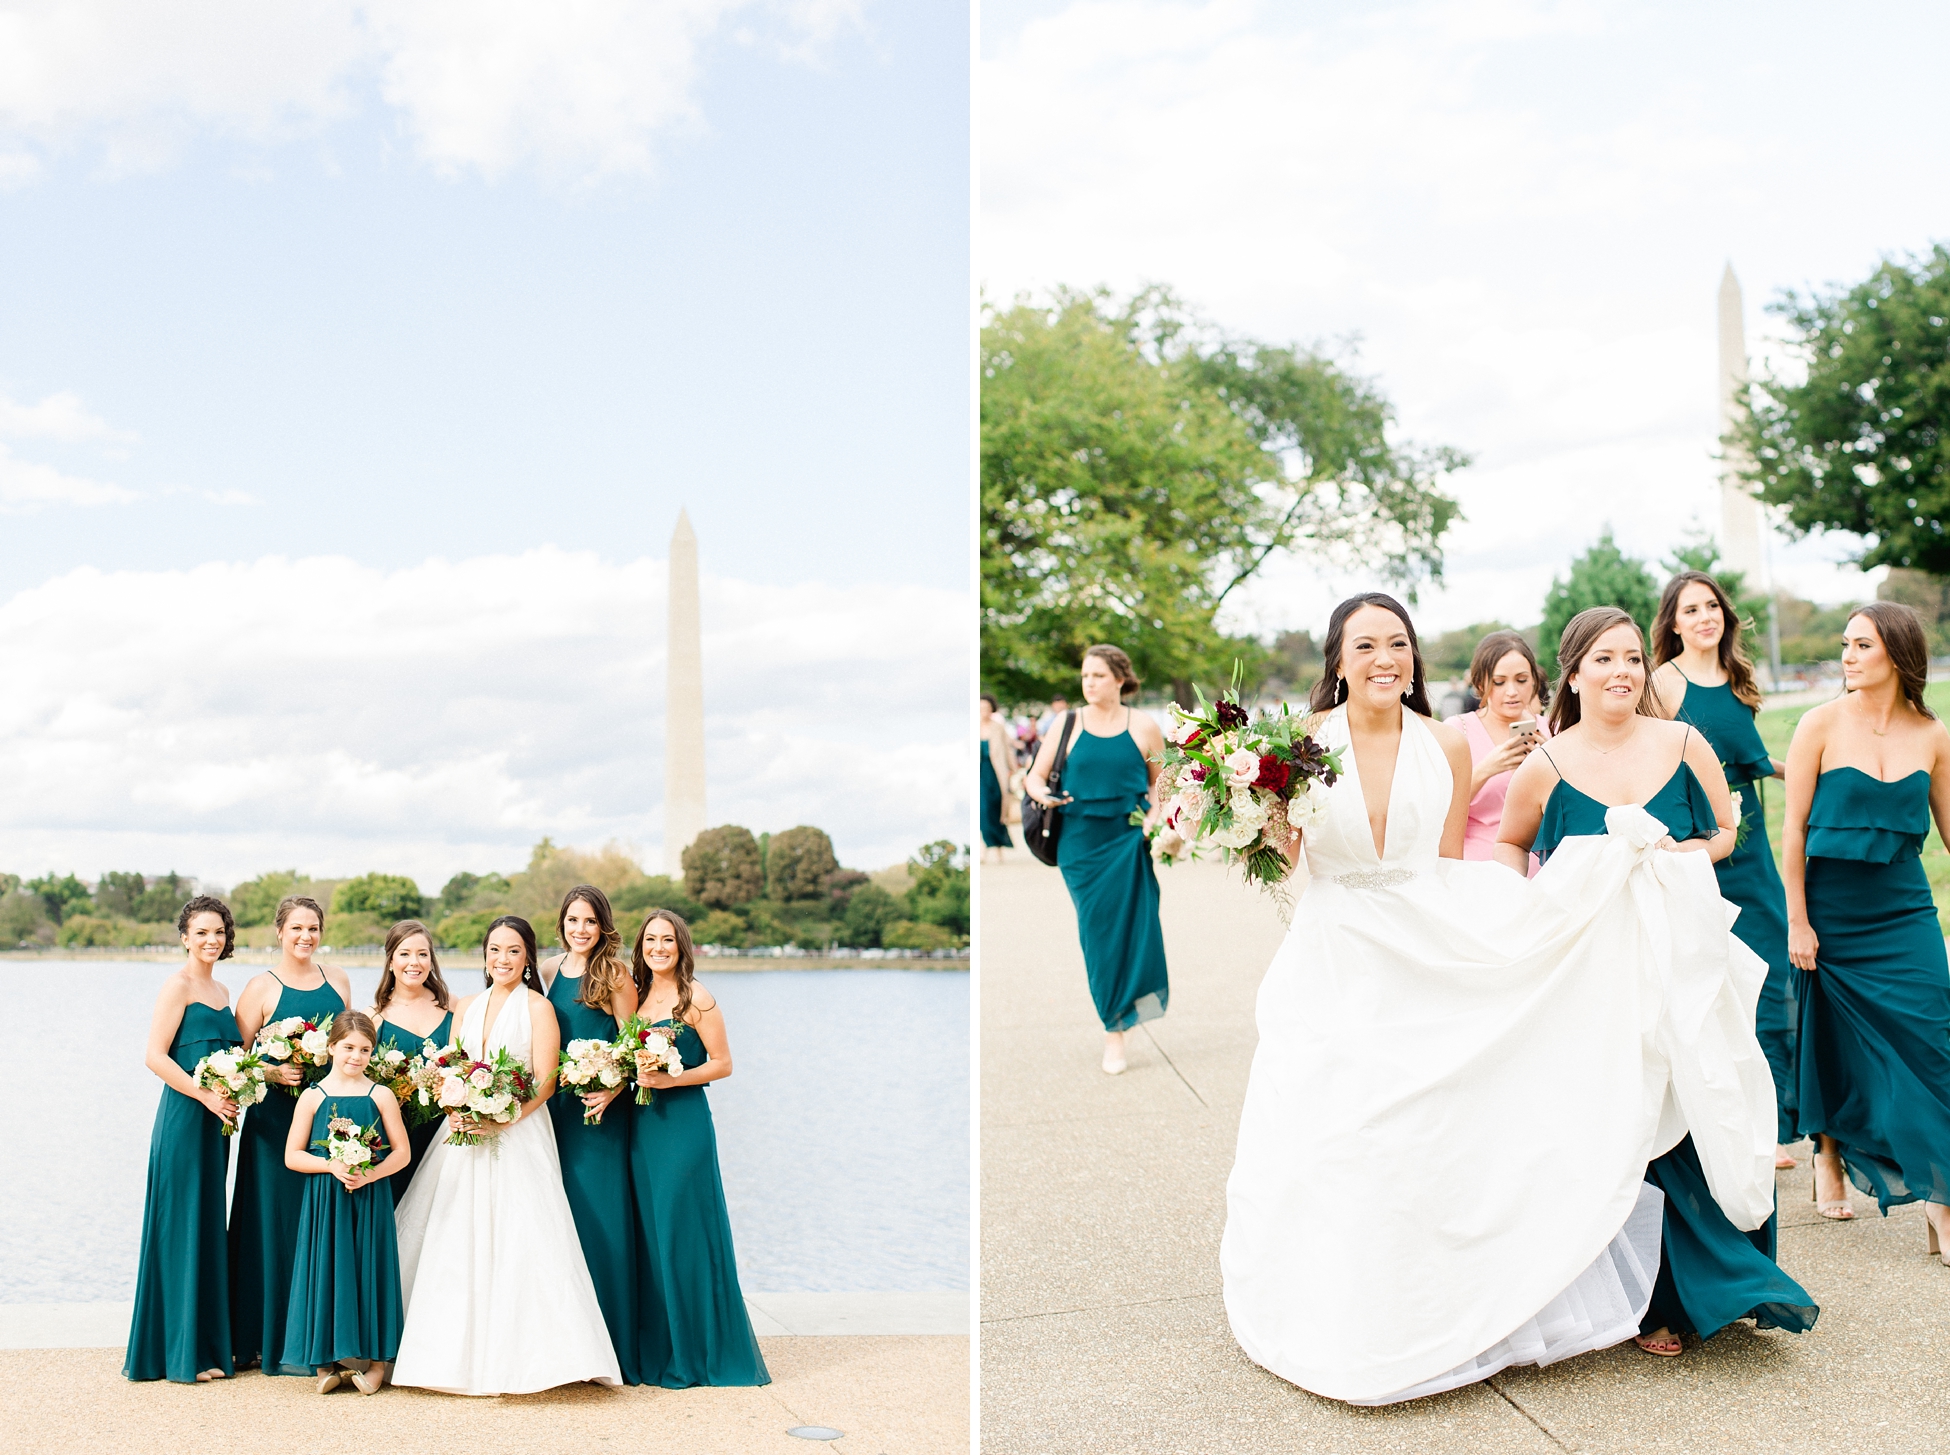 Meridian House DC Wedding | © Ailyn La Torre Photography 2018